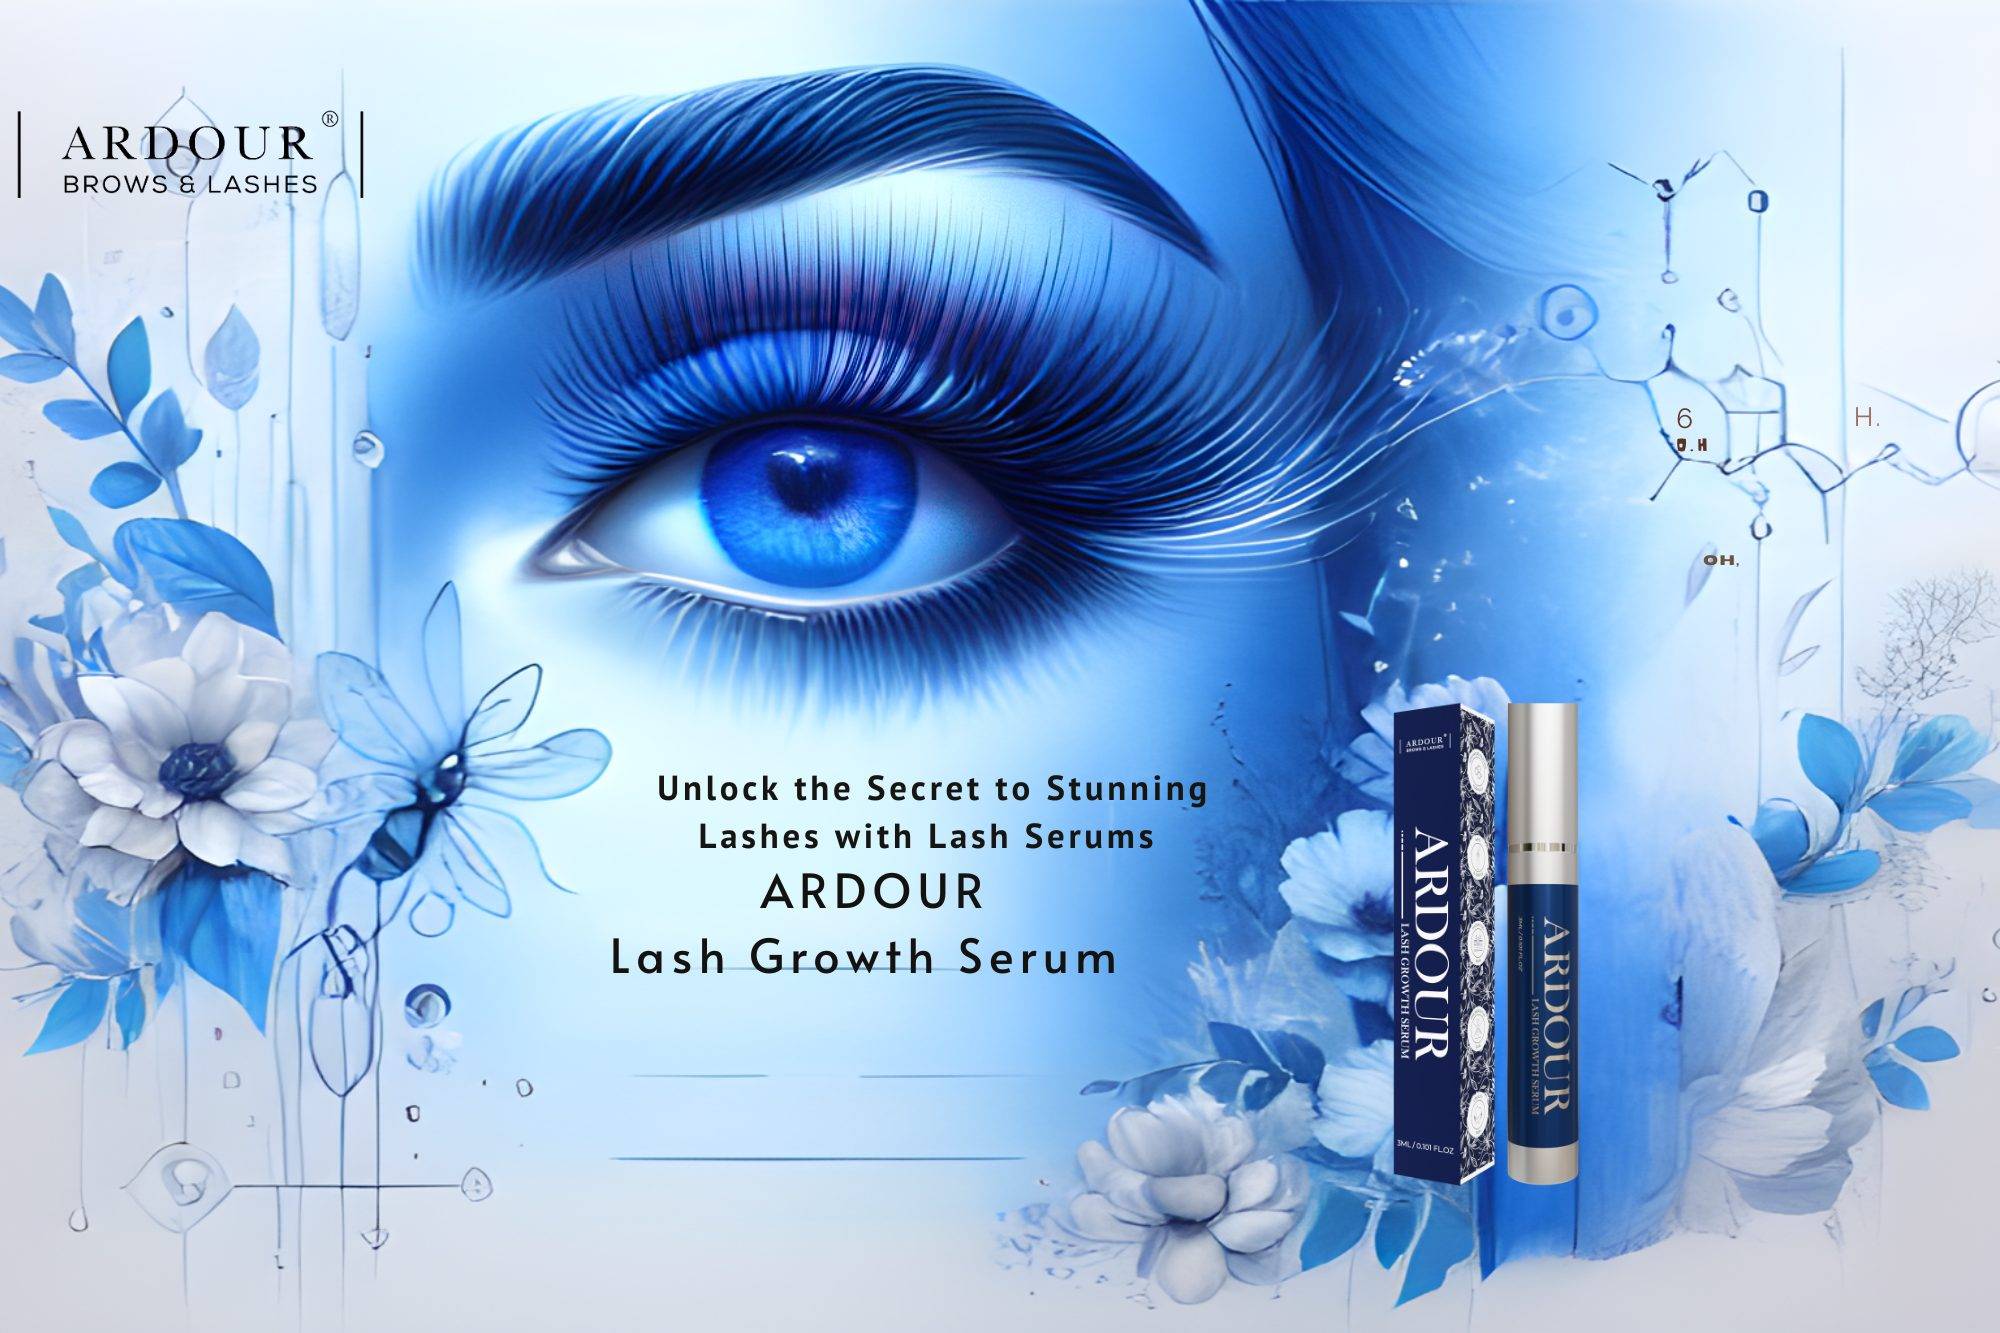 Unlock the Secret to Stunning Lashes with EyeLash Serums – Featuring Ardour EyeLash Growth Serum